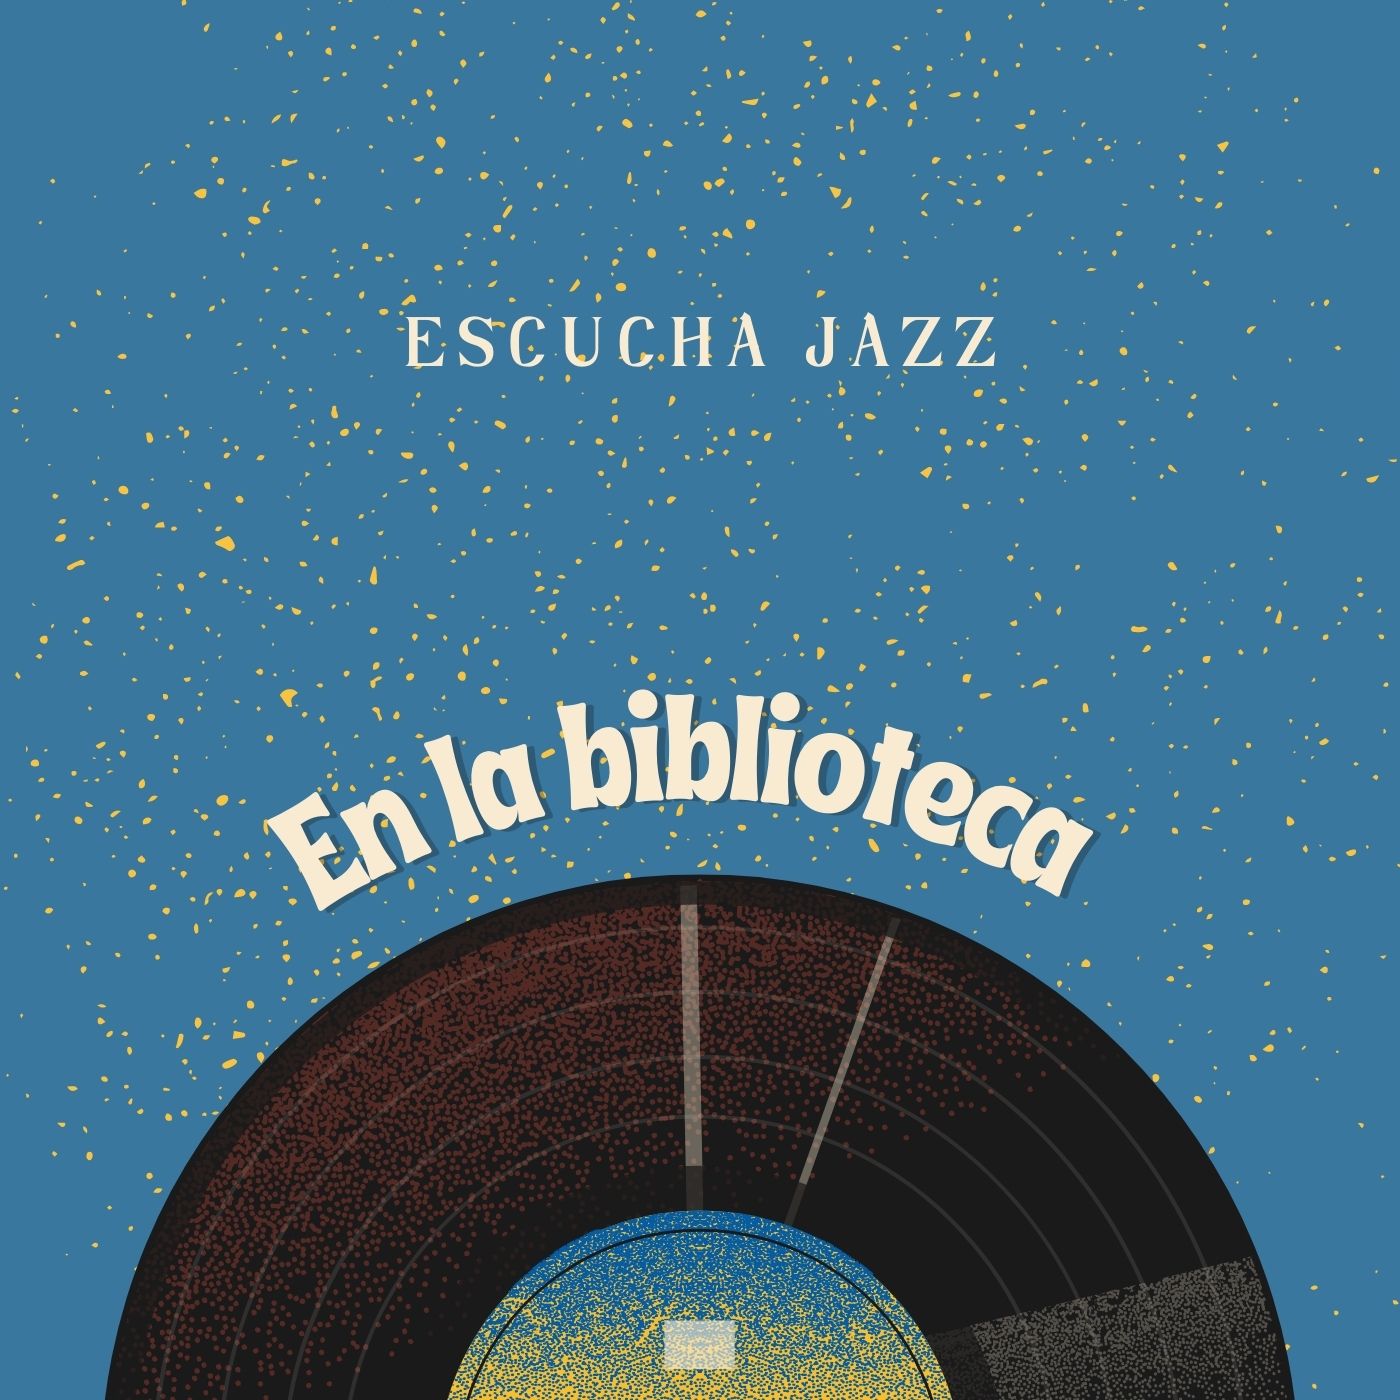 Portada para CD Álbum de Música Jazz con Ilustración de Vinilo, fondo azul  - Jazz Palencia